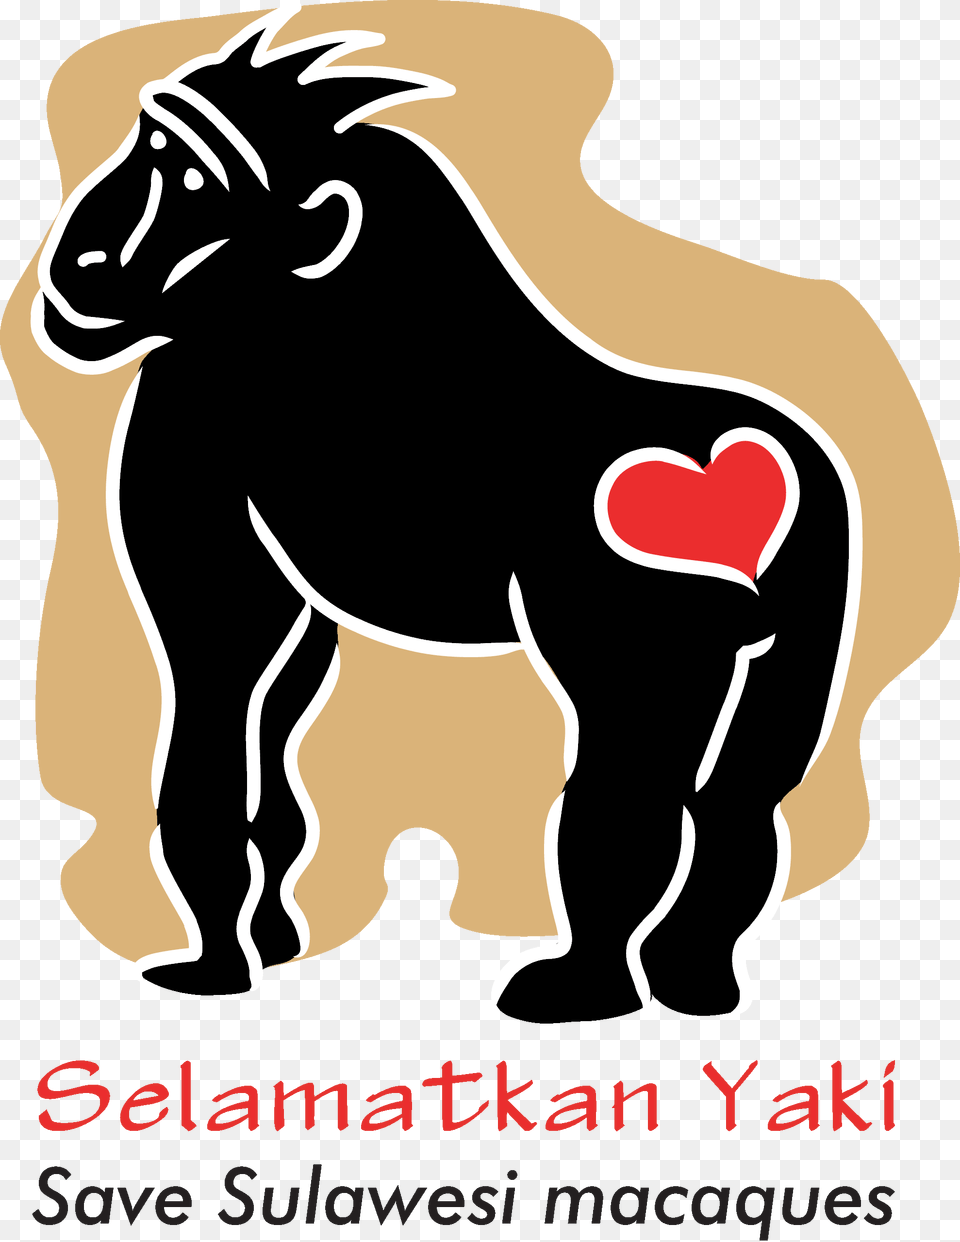 Selamatkan Yaki 1 Macaque Logo With Text Black Logo Macaca Nigra Project, Stencil, Baby, Person, Animal Png